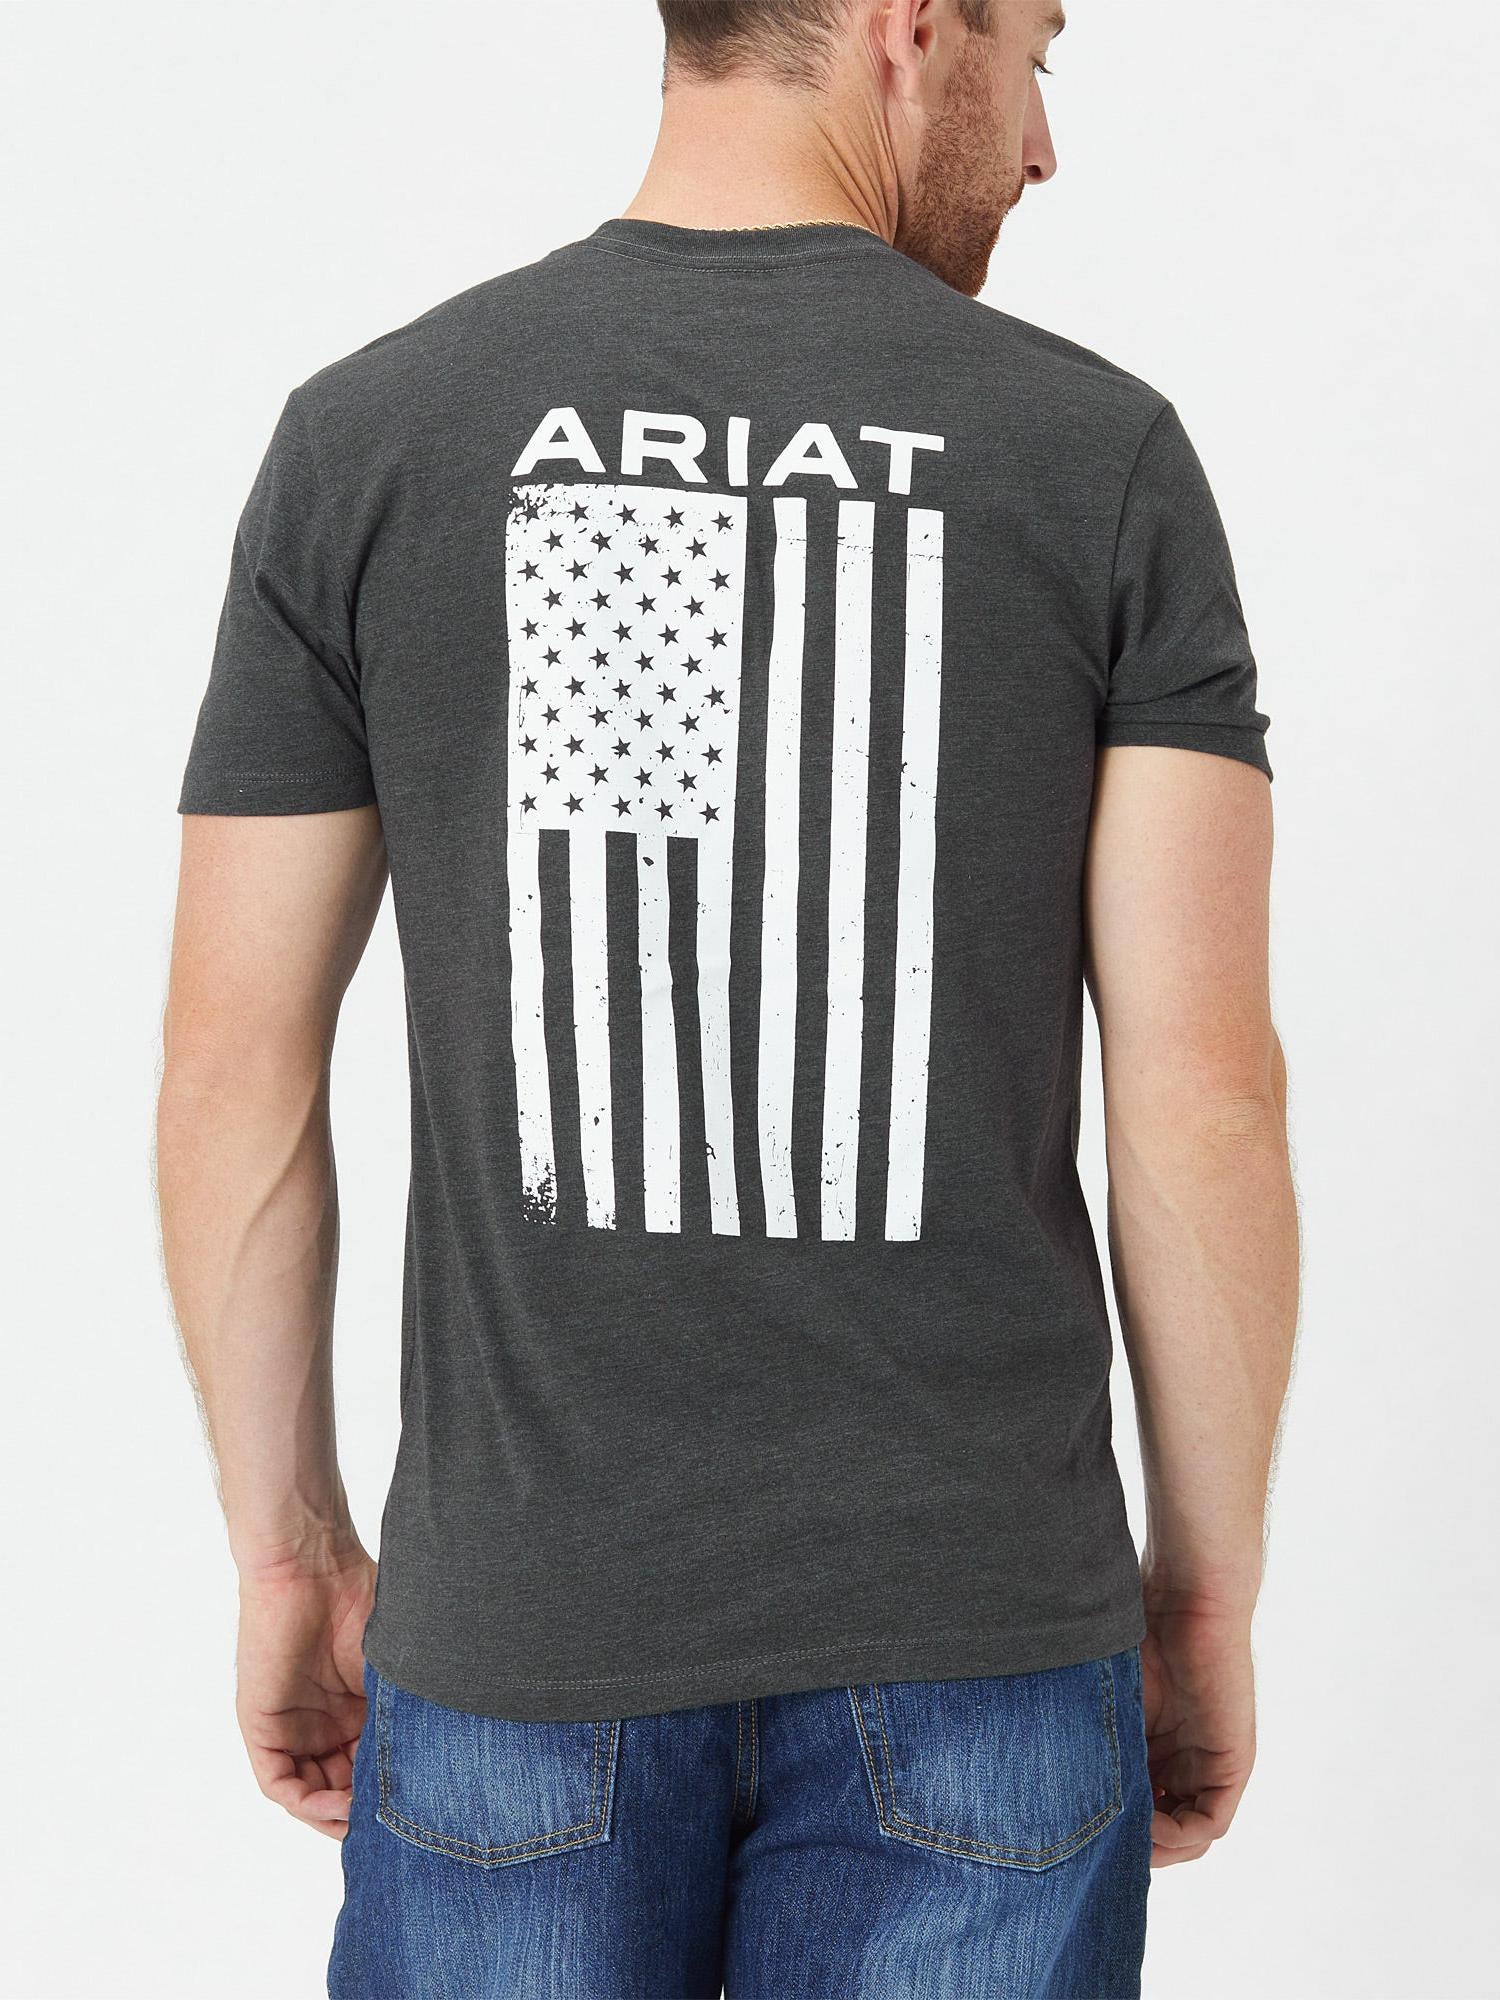 Ariat Men's Short Sleeve Graphic Tee Shirt - Riding Warehouse